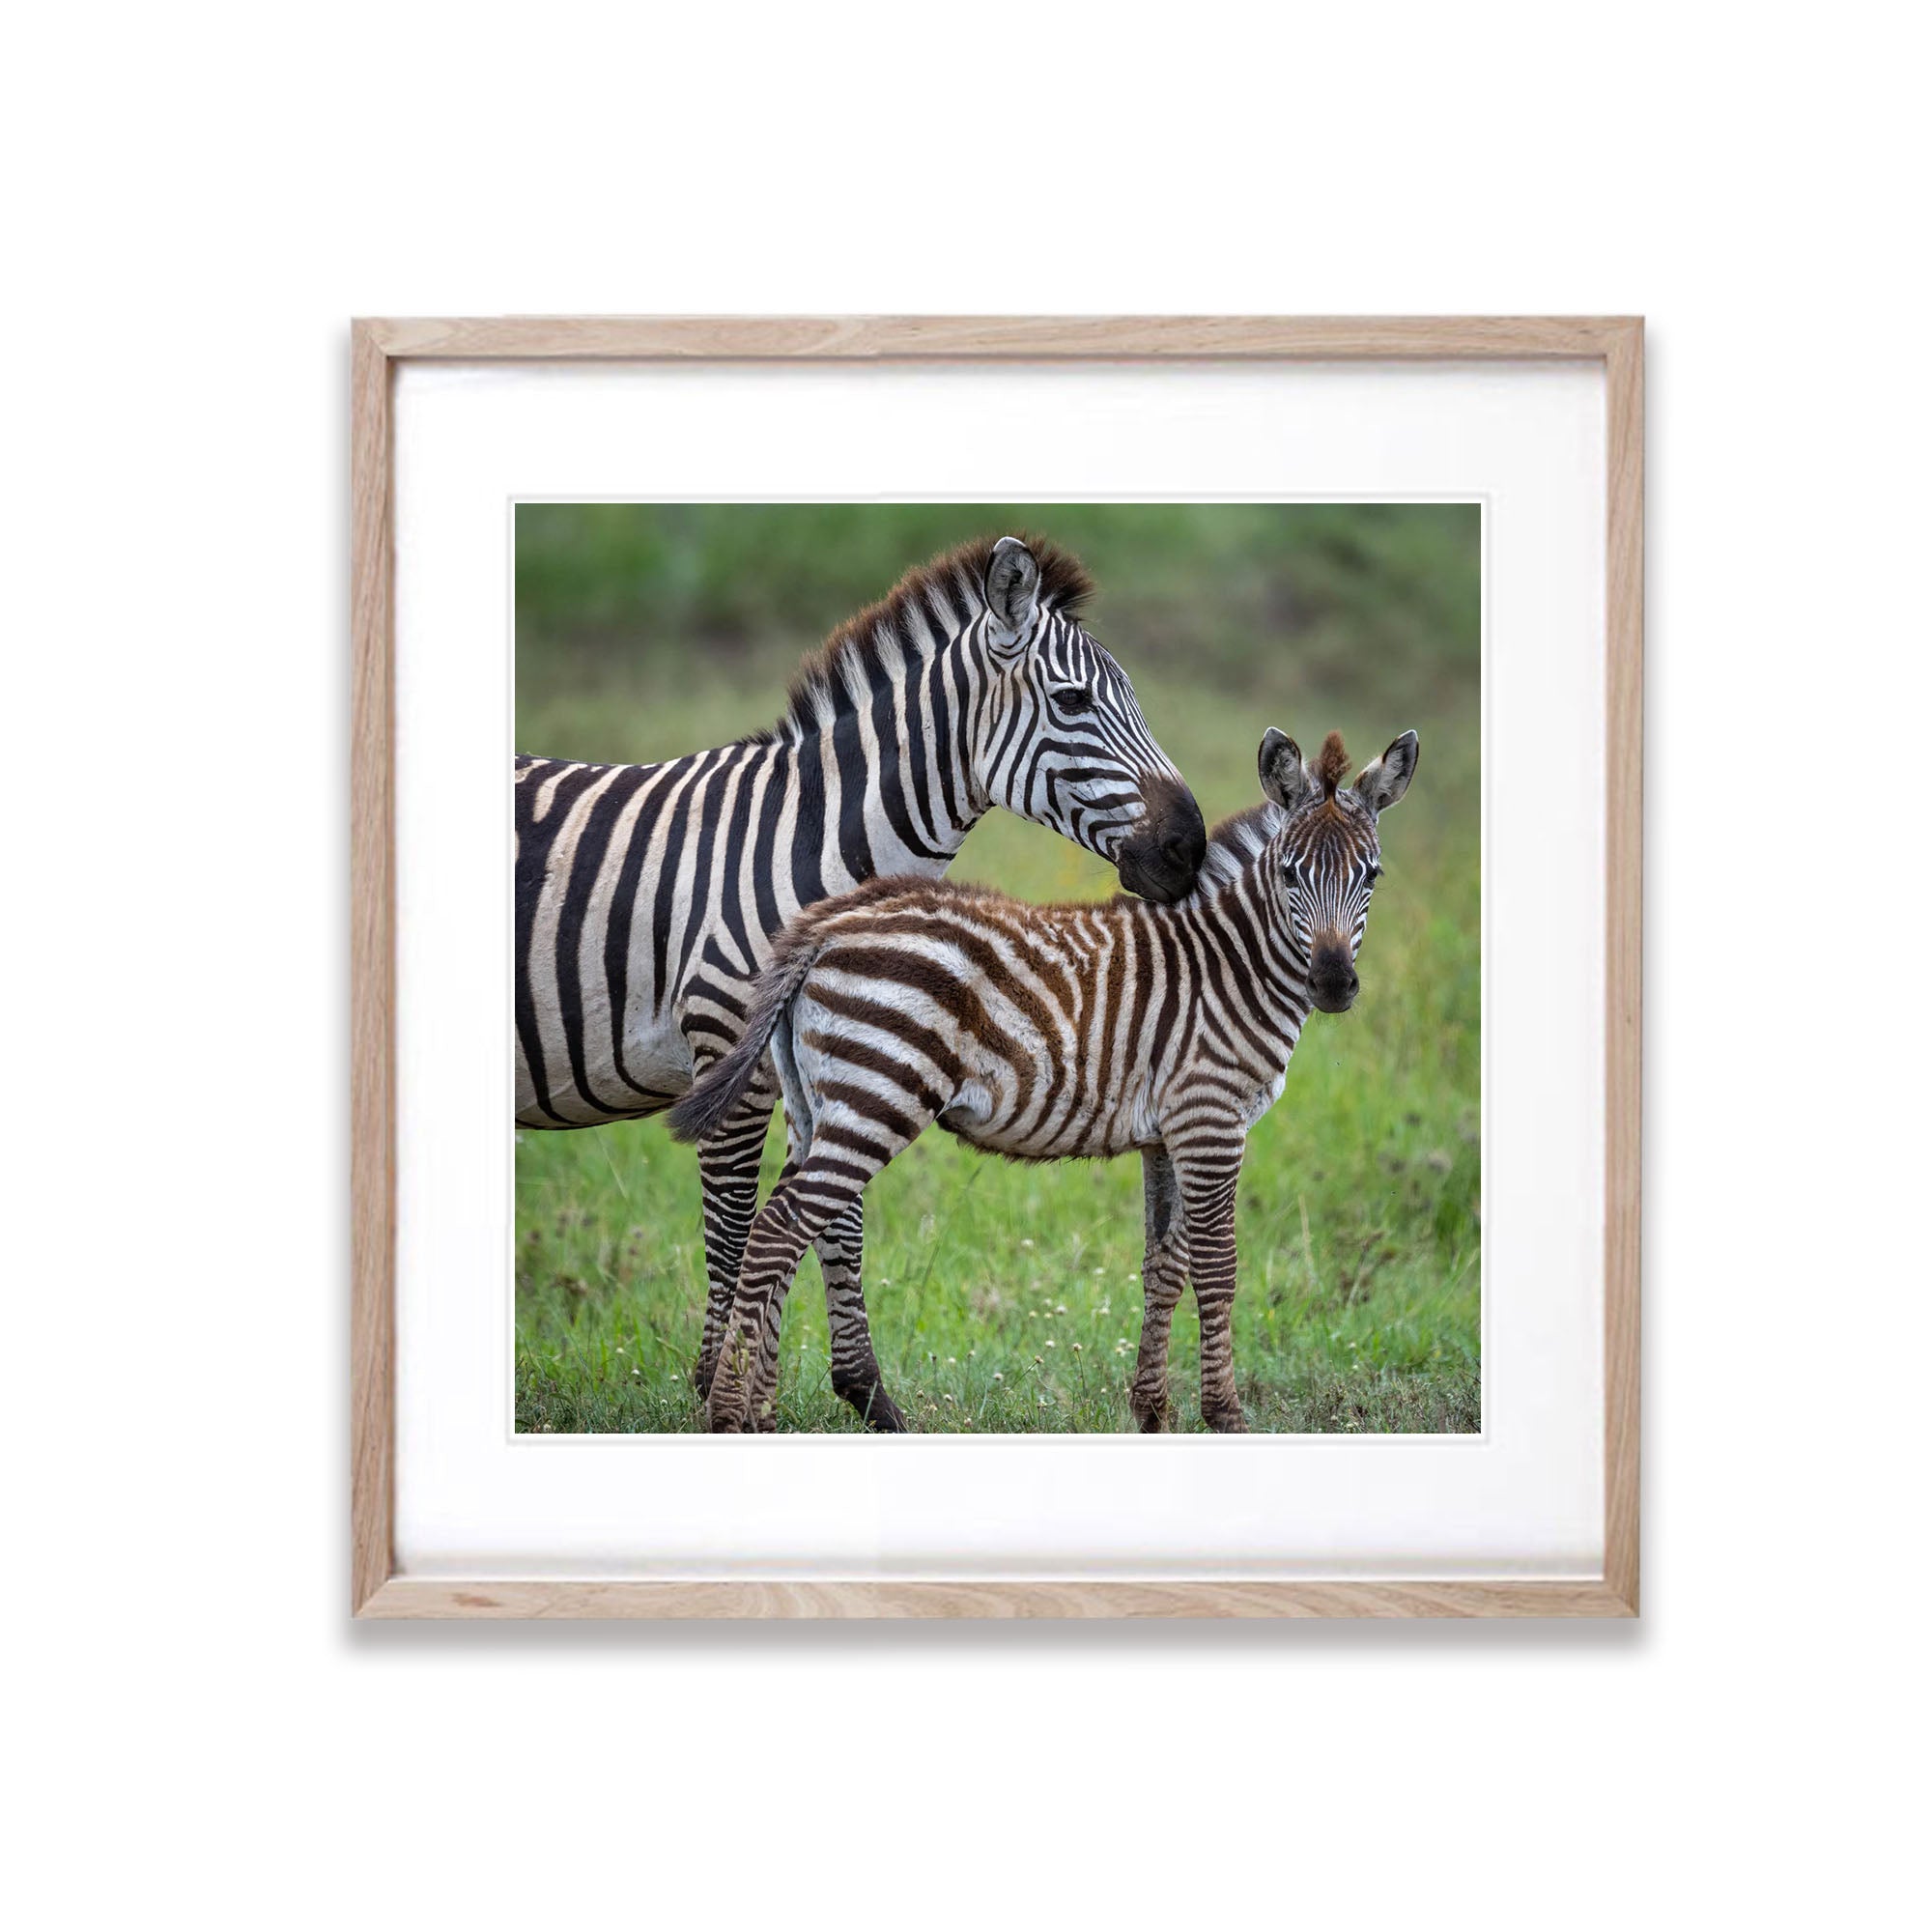 Young Zebra with mum, Tanzania